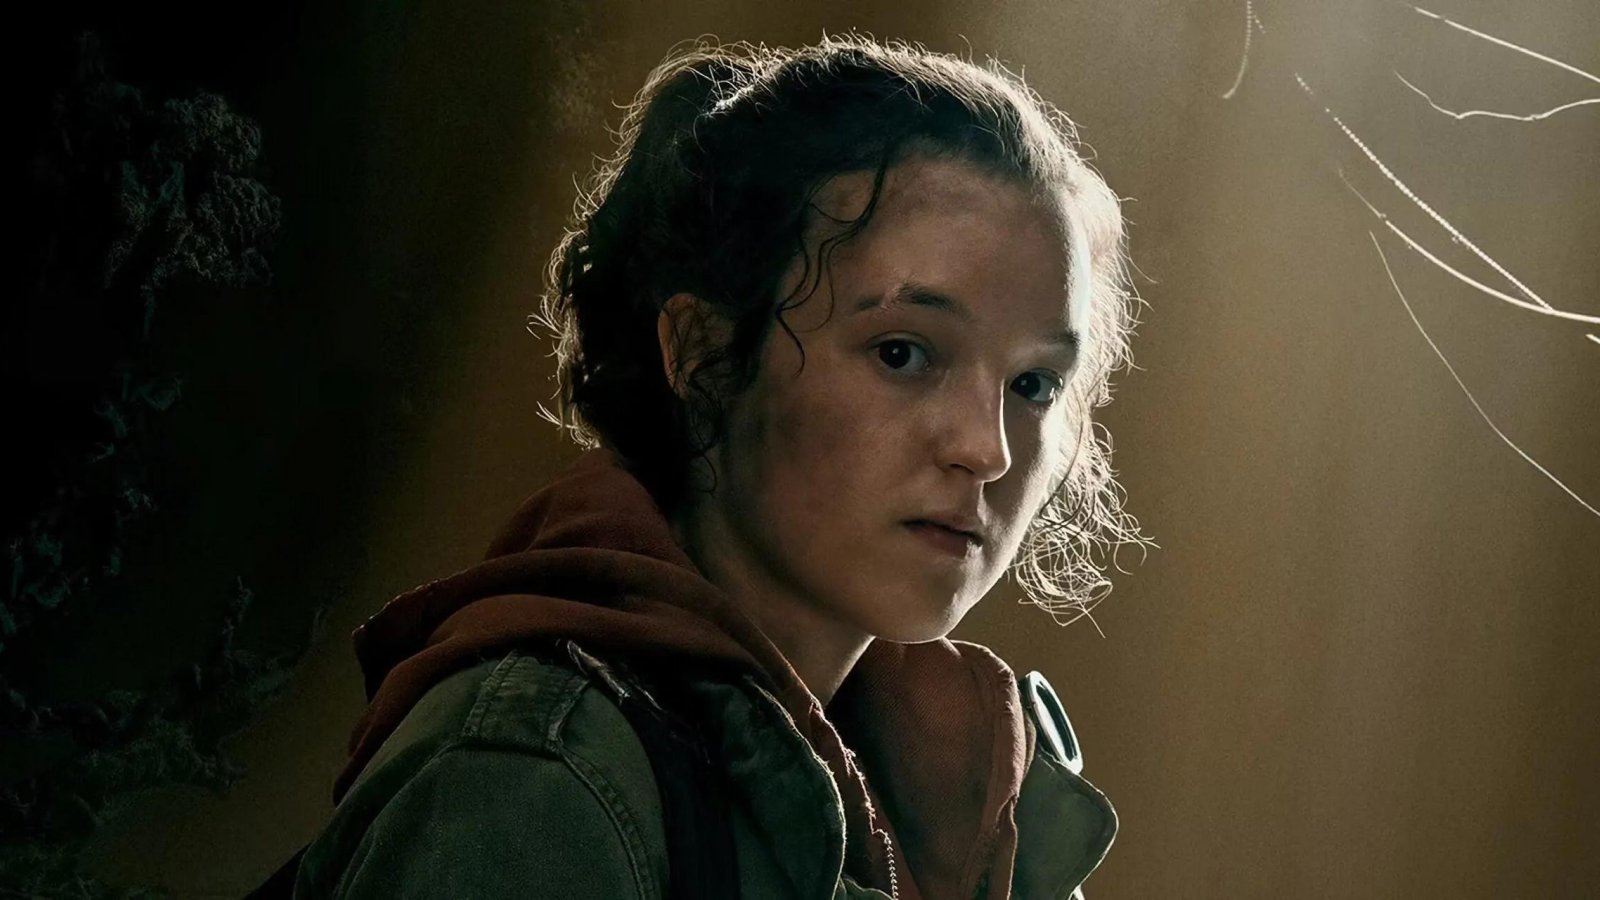 The Last of Us, serie TV: l'attrice di Ellie parla di un finale brutale che dividerà i fan